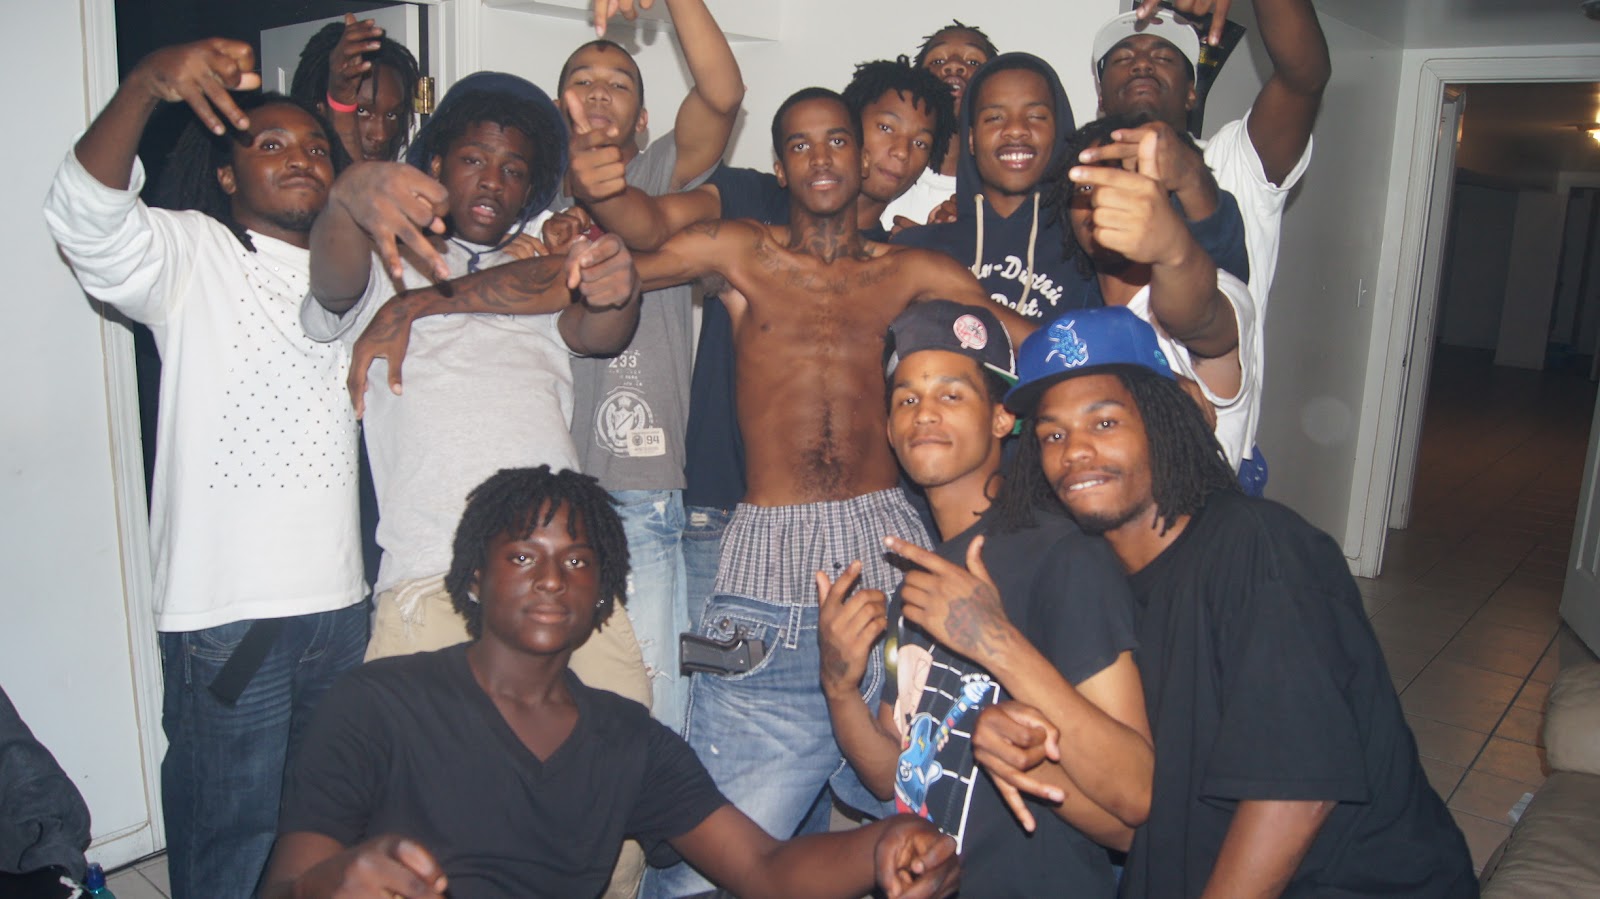 Hood gang